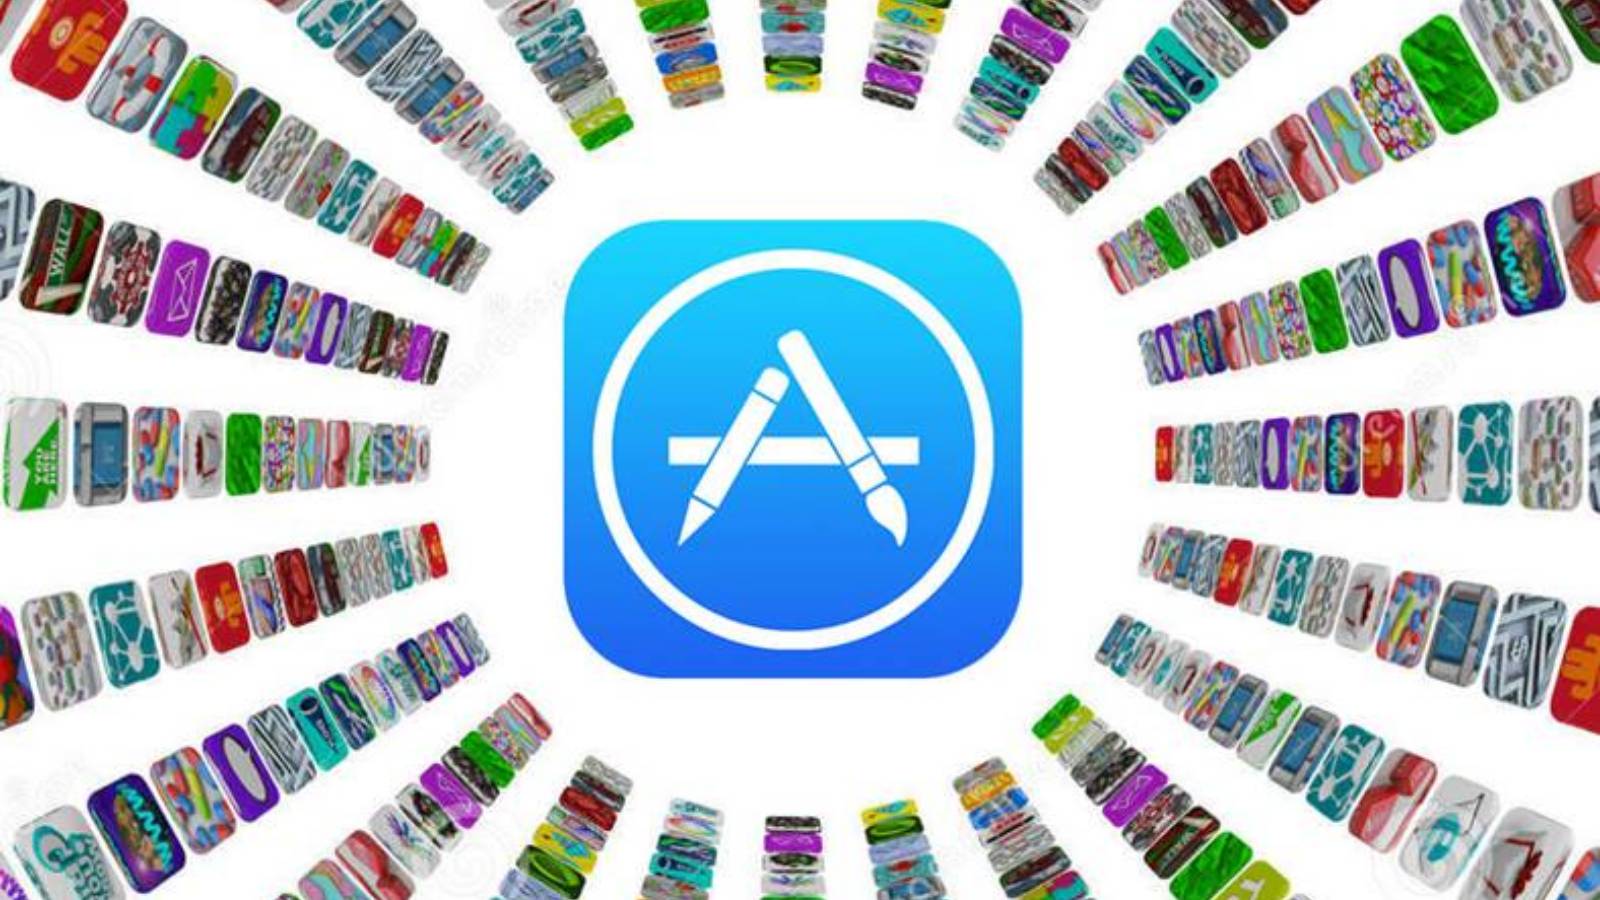 Avertissement Apple Magasins tiers Applications iPhone iPad